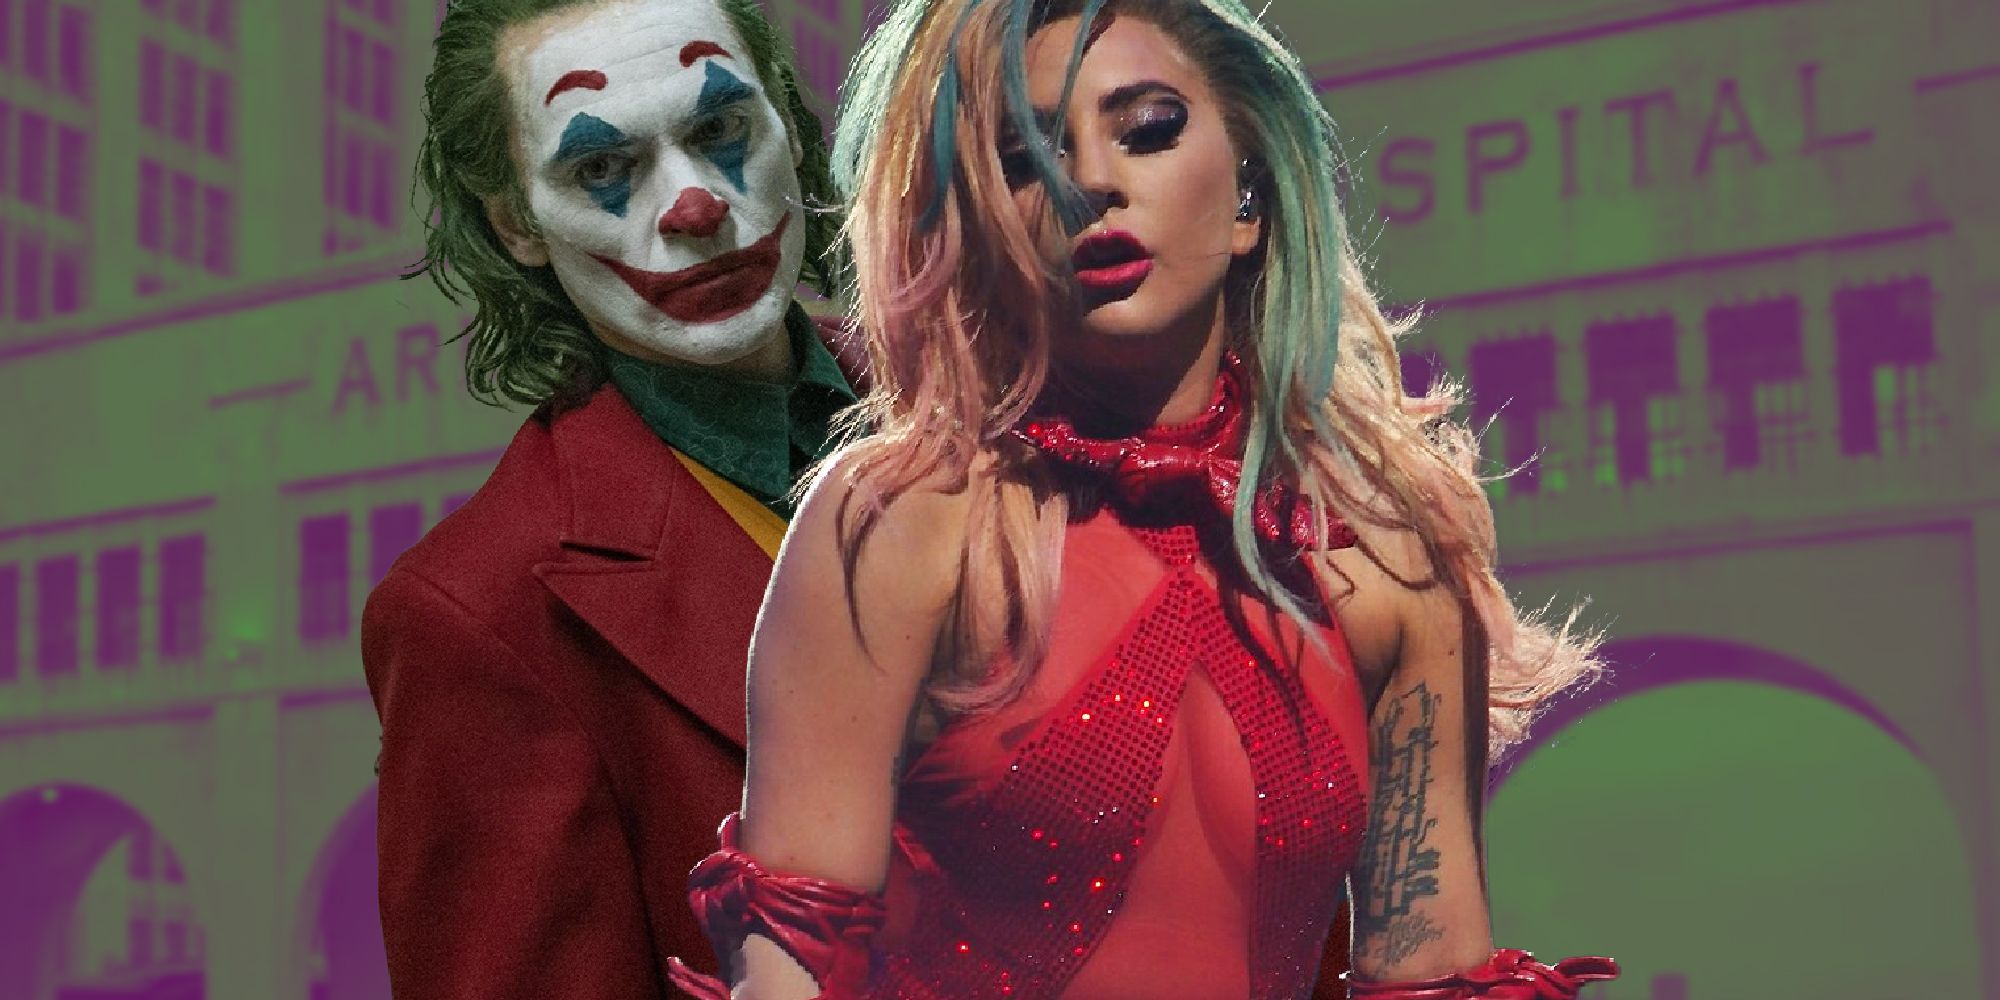 Joker and Lady Gaga